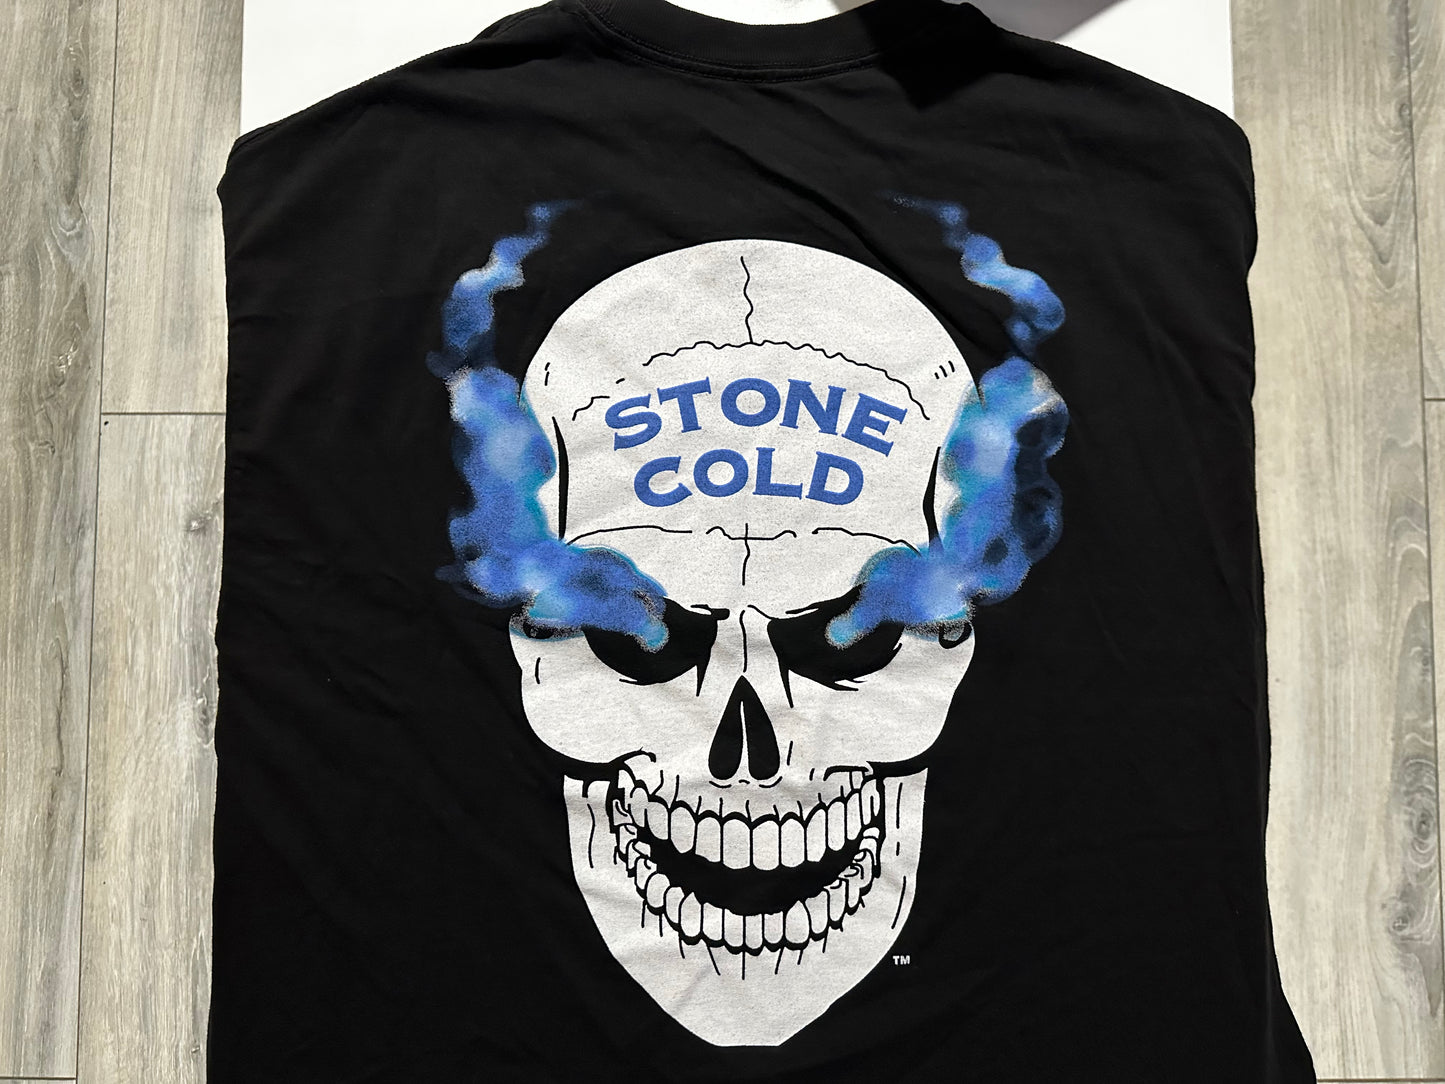 Stone Cold Steve Austin “What”